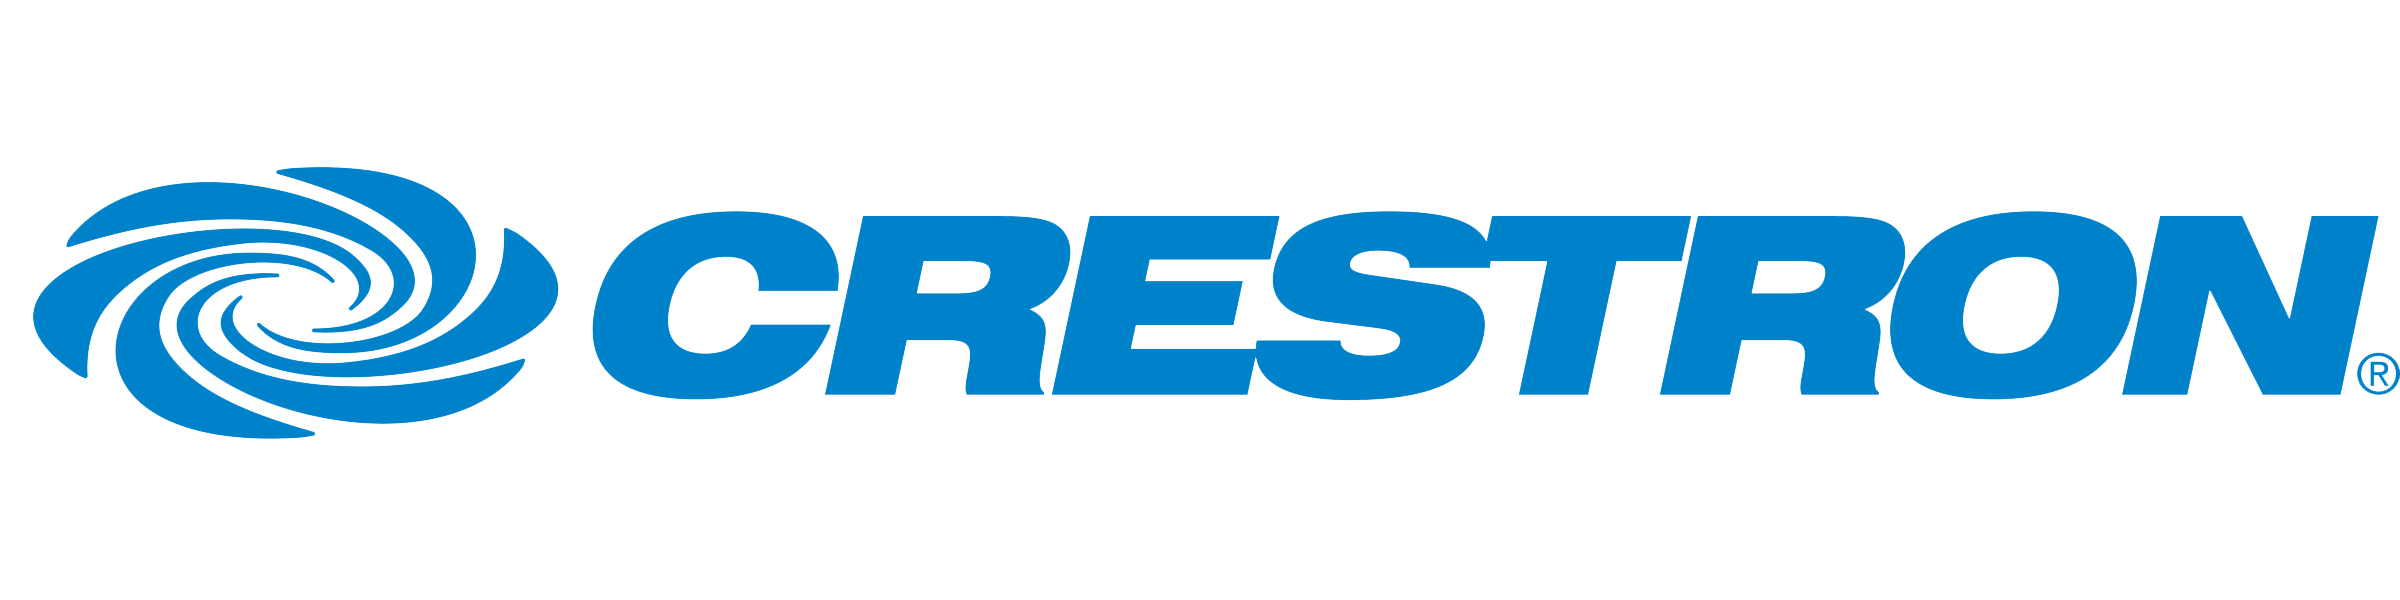 Crestron Logo photo - 1